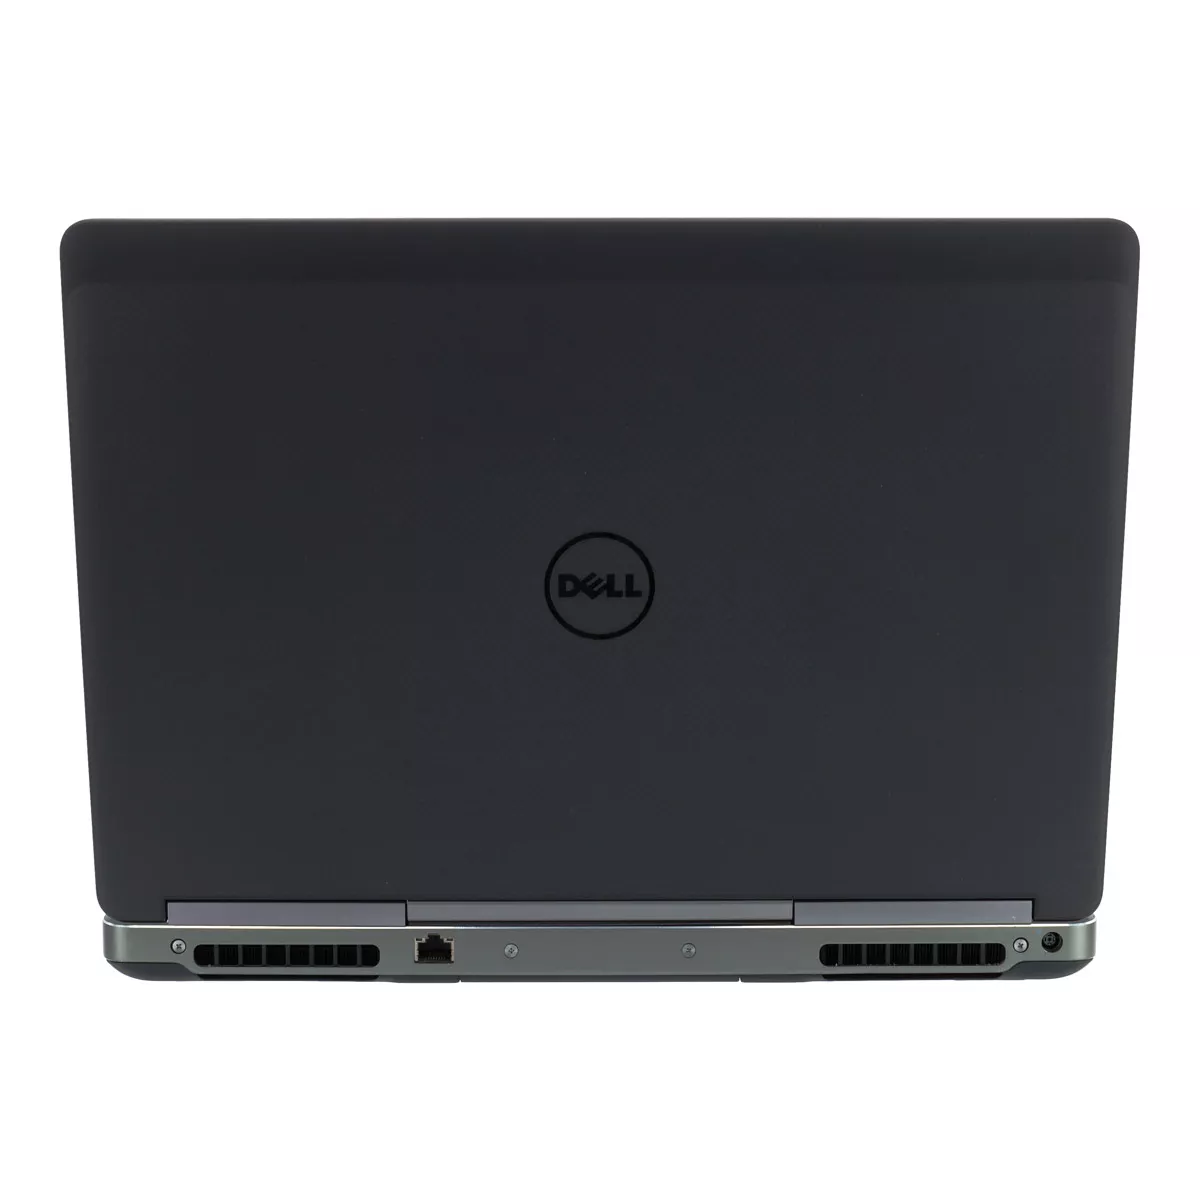 Dell Precision 7520 Core i7 7920HQ nVidia Quadro M1200M 32 GB 500 GB M.2 nVME SSD Webcam B